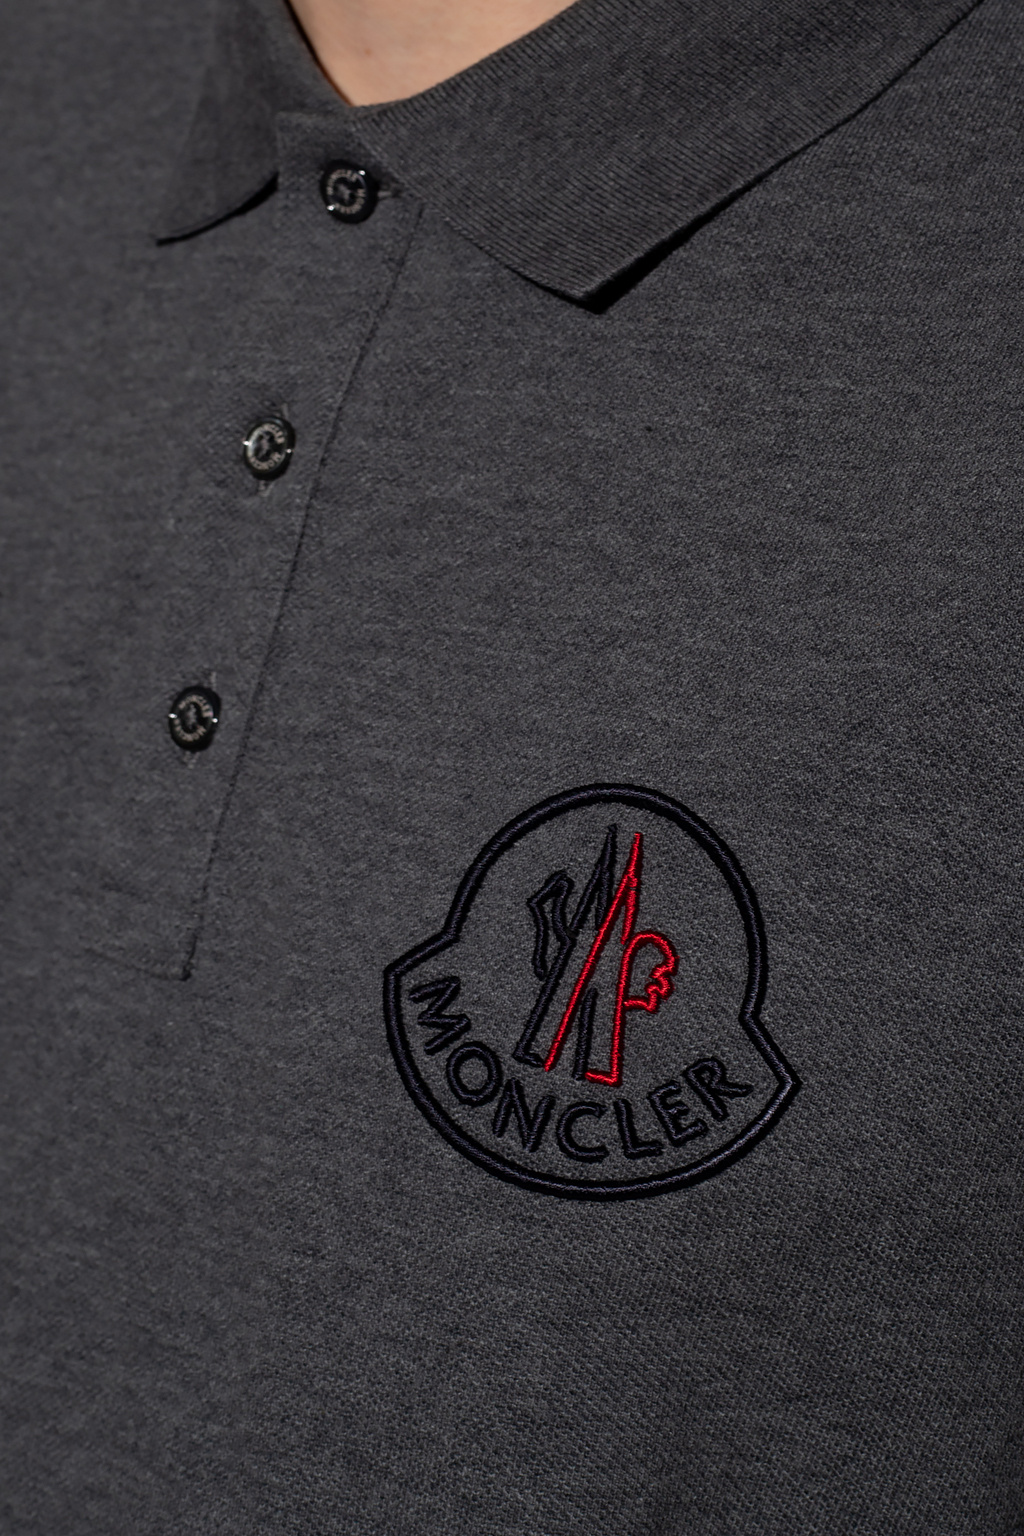 Moncler Polo shirt with logo | Men's Clothing | IetpShops